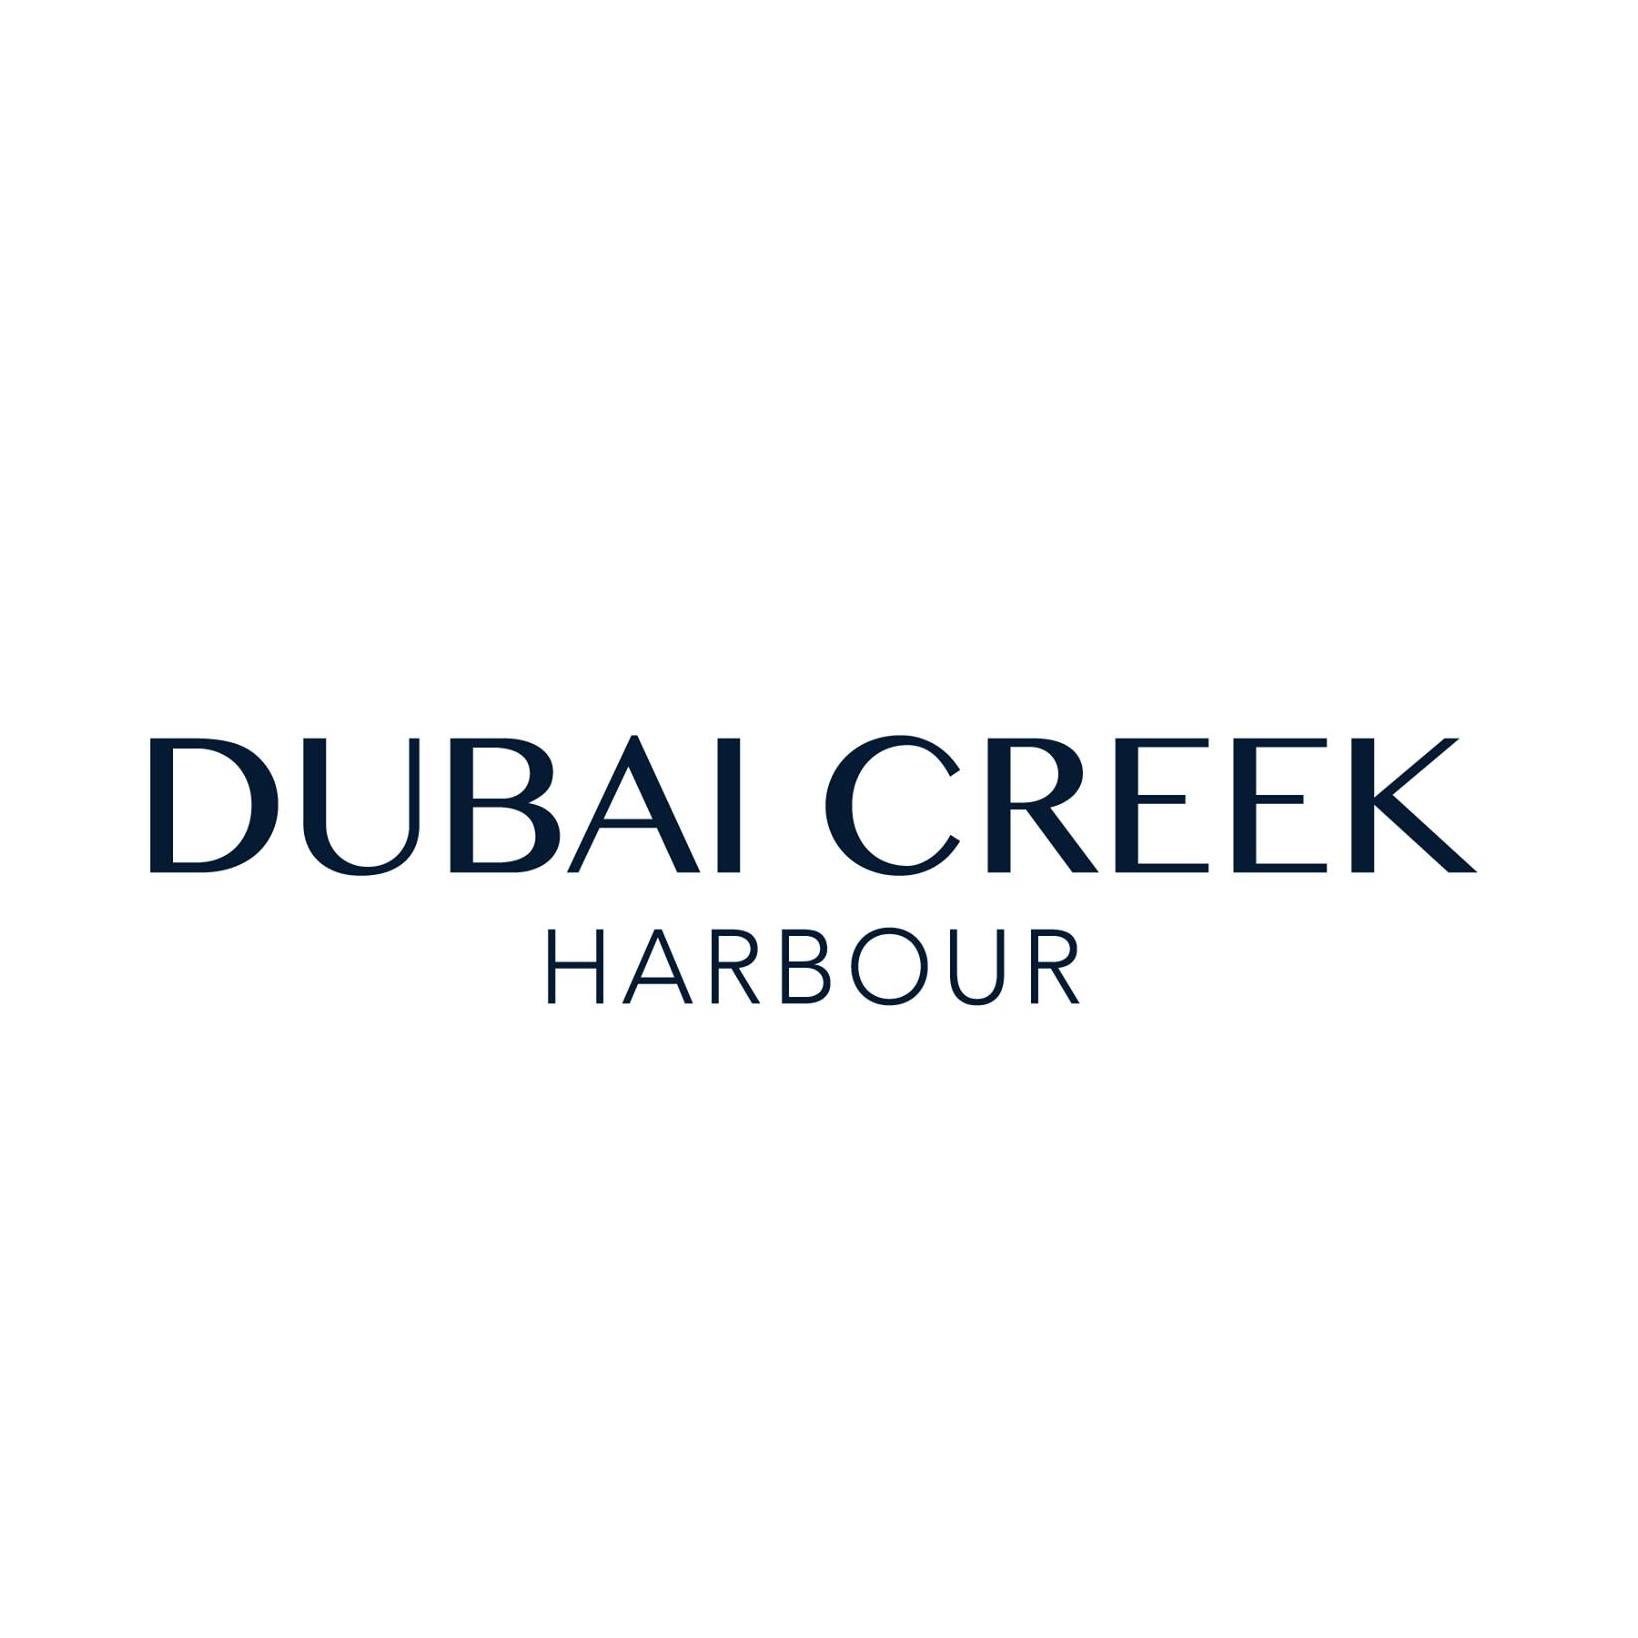 Dubai Creek Harbour, @emaardubai’s upcoming flagship destination, is at the heart of a bold new vision for Dubai.